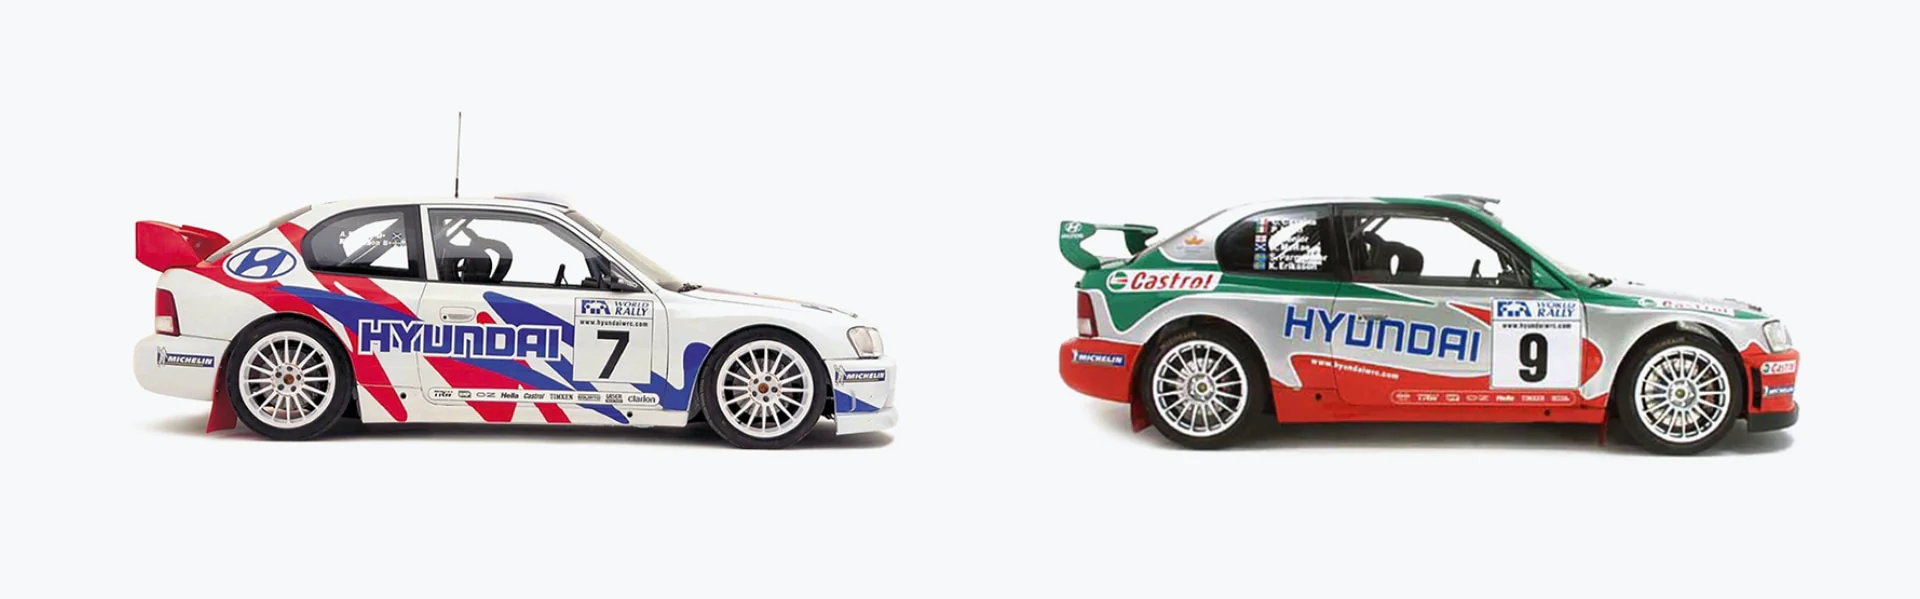 Hyundai N WRC cars